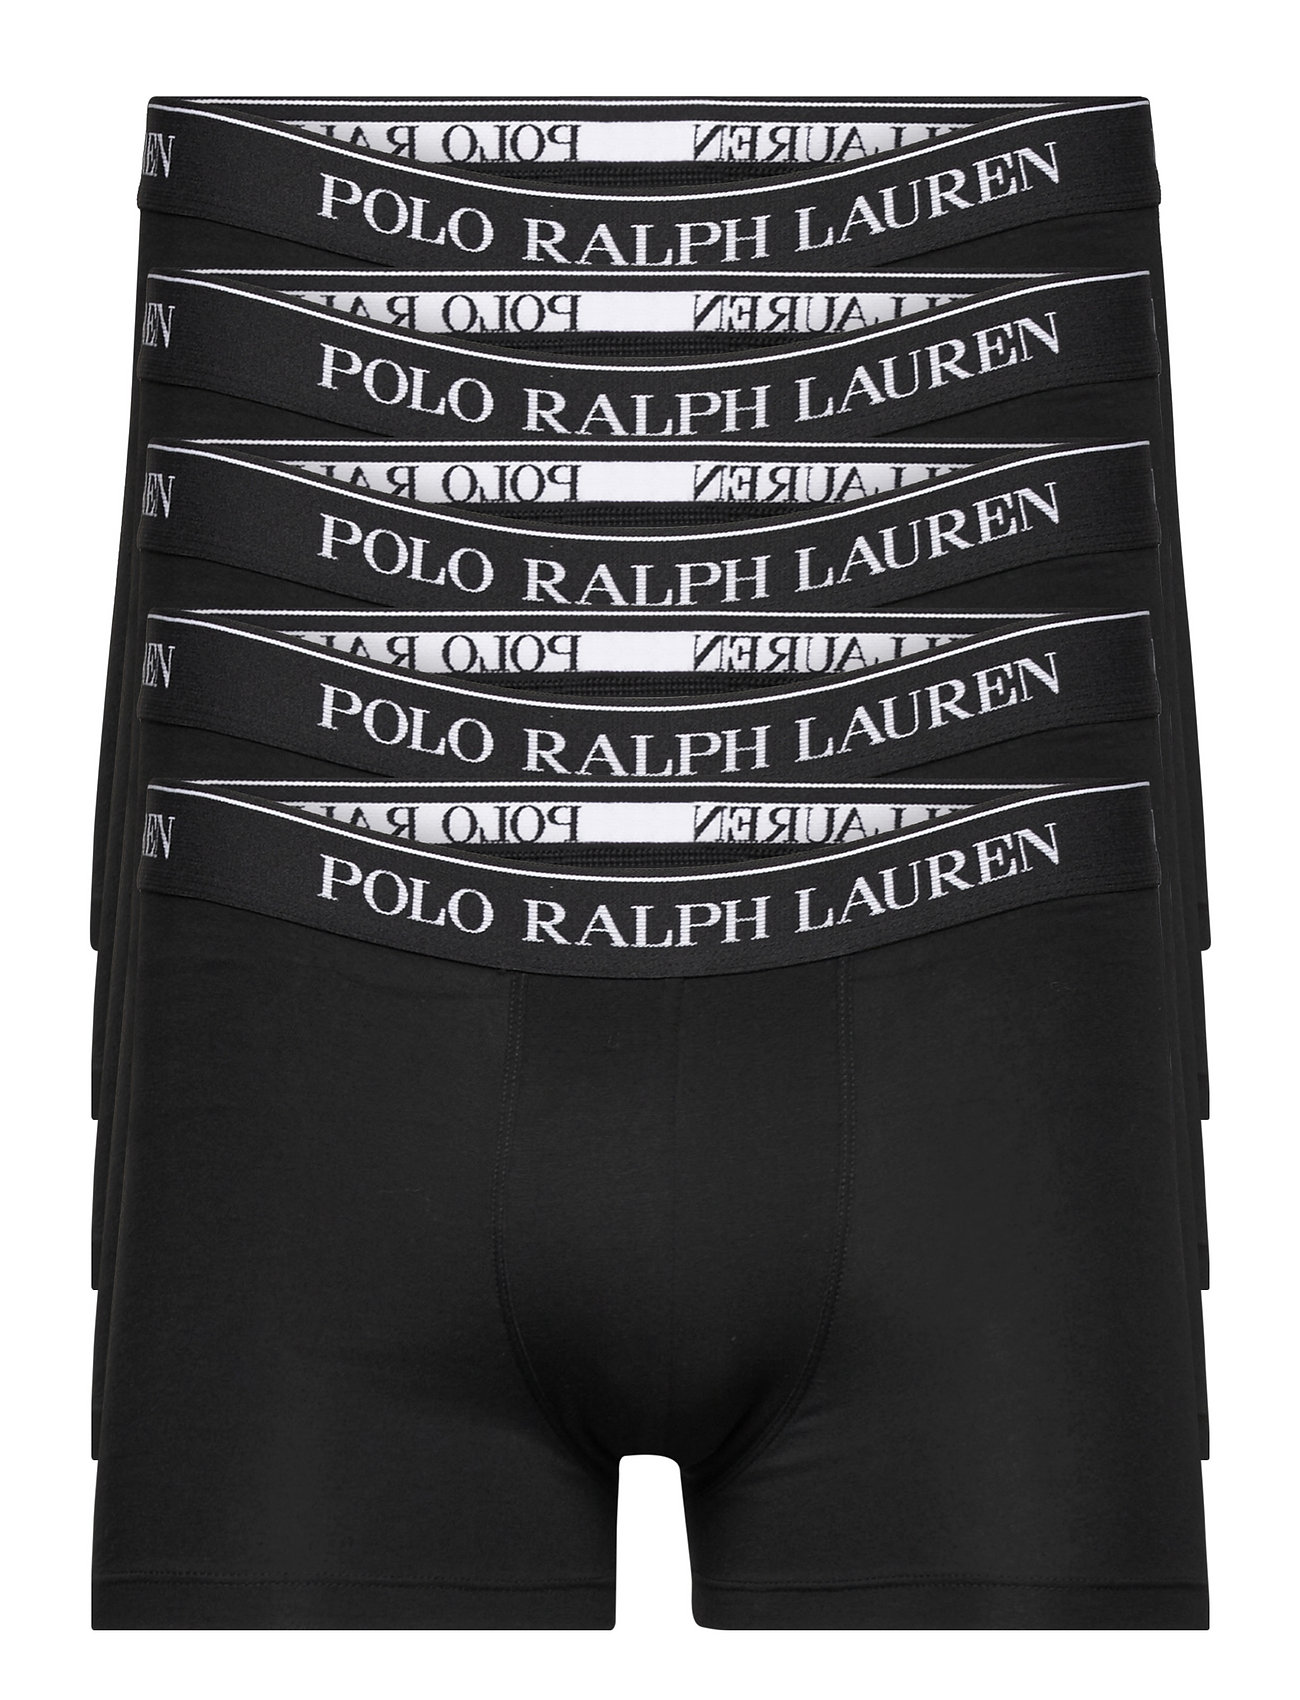 Polo Ralph Lauren Underwear Classic Stretch Cotton Trunk 5-pack